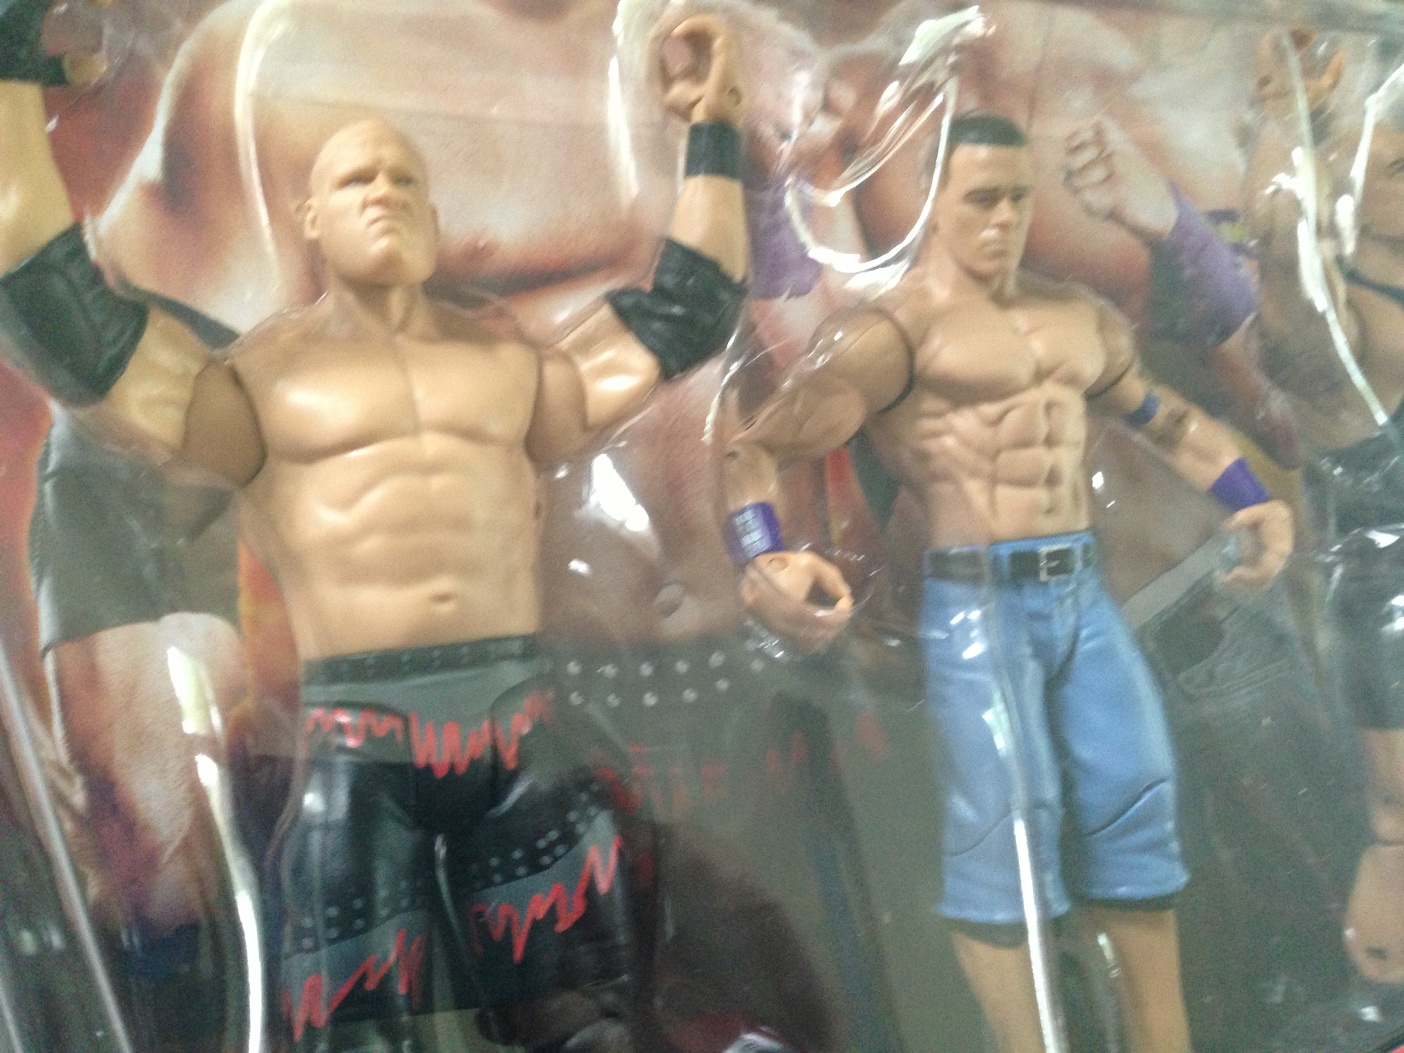 Kane John Cena and The Big Show